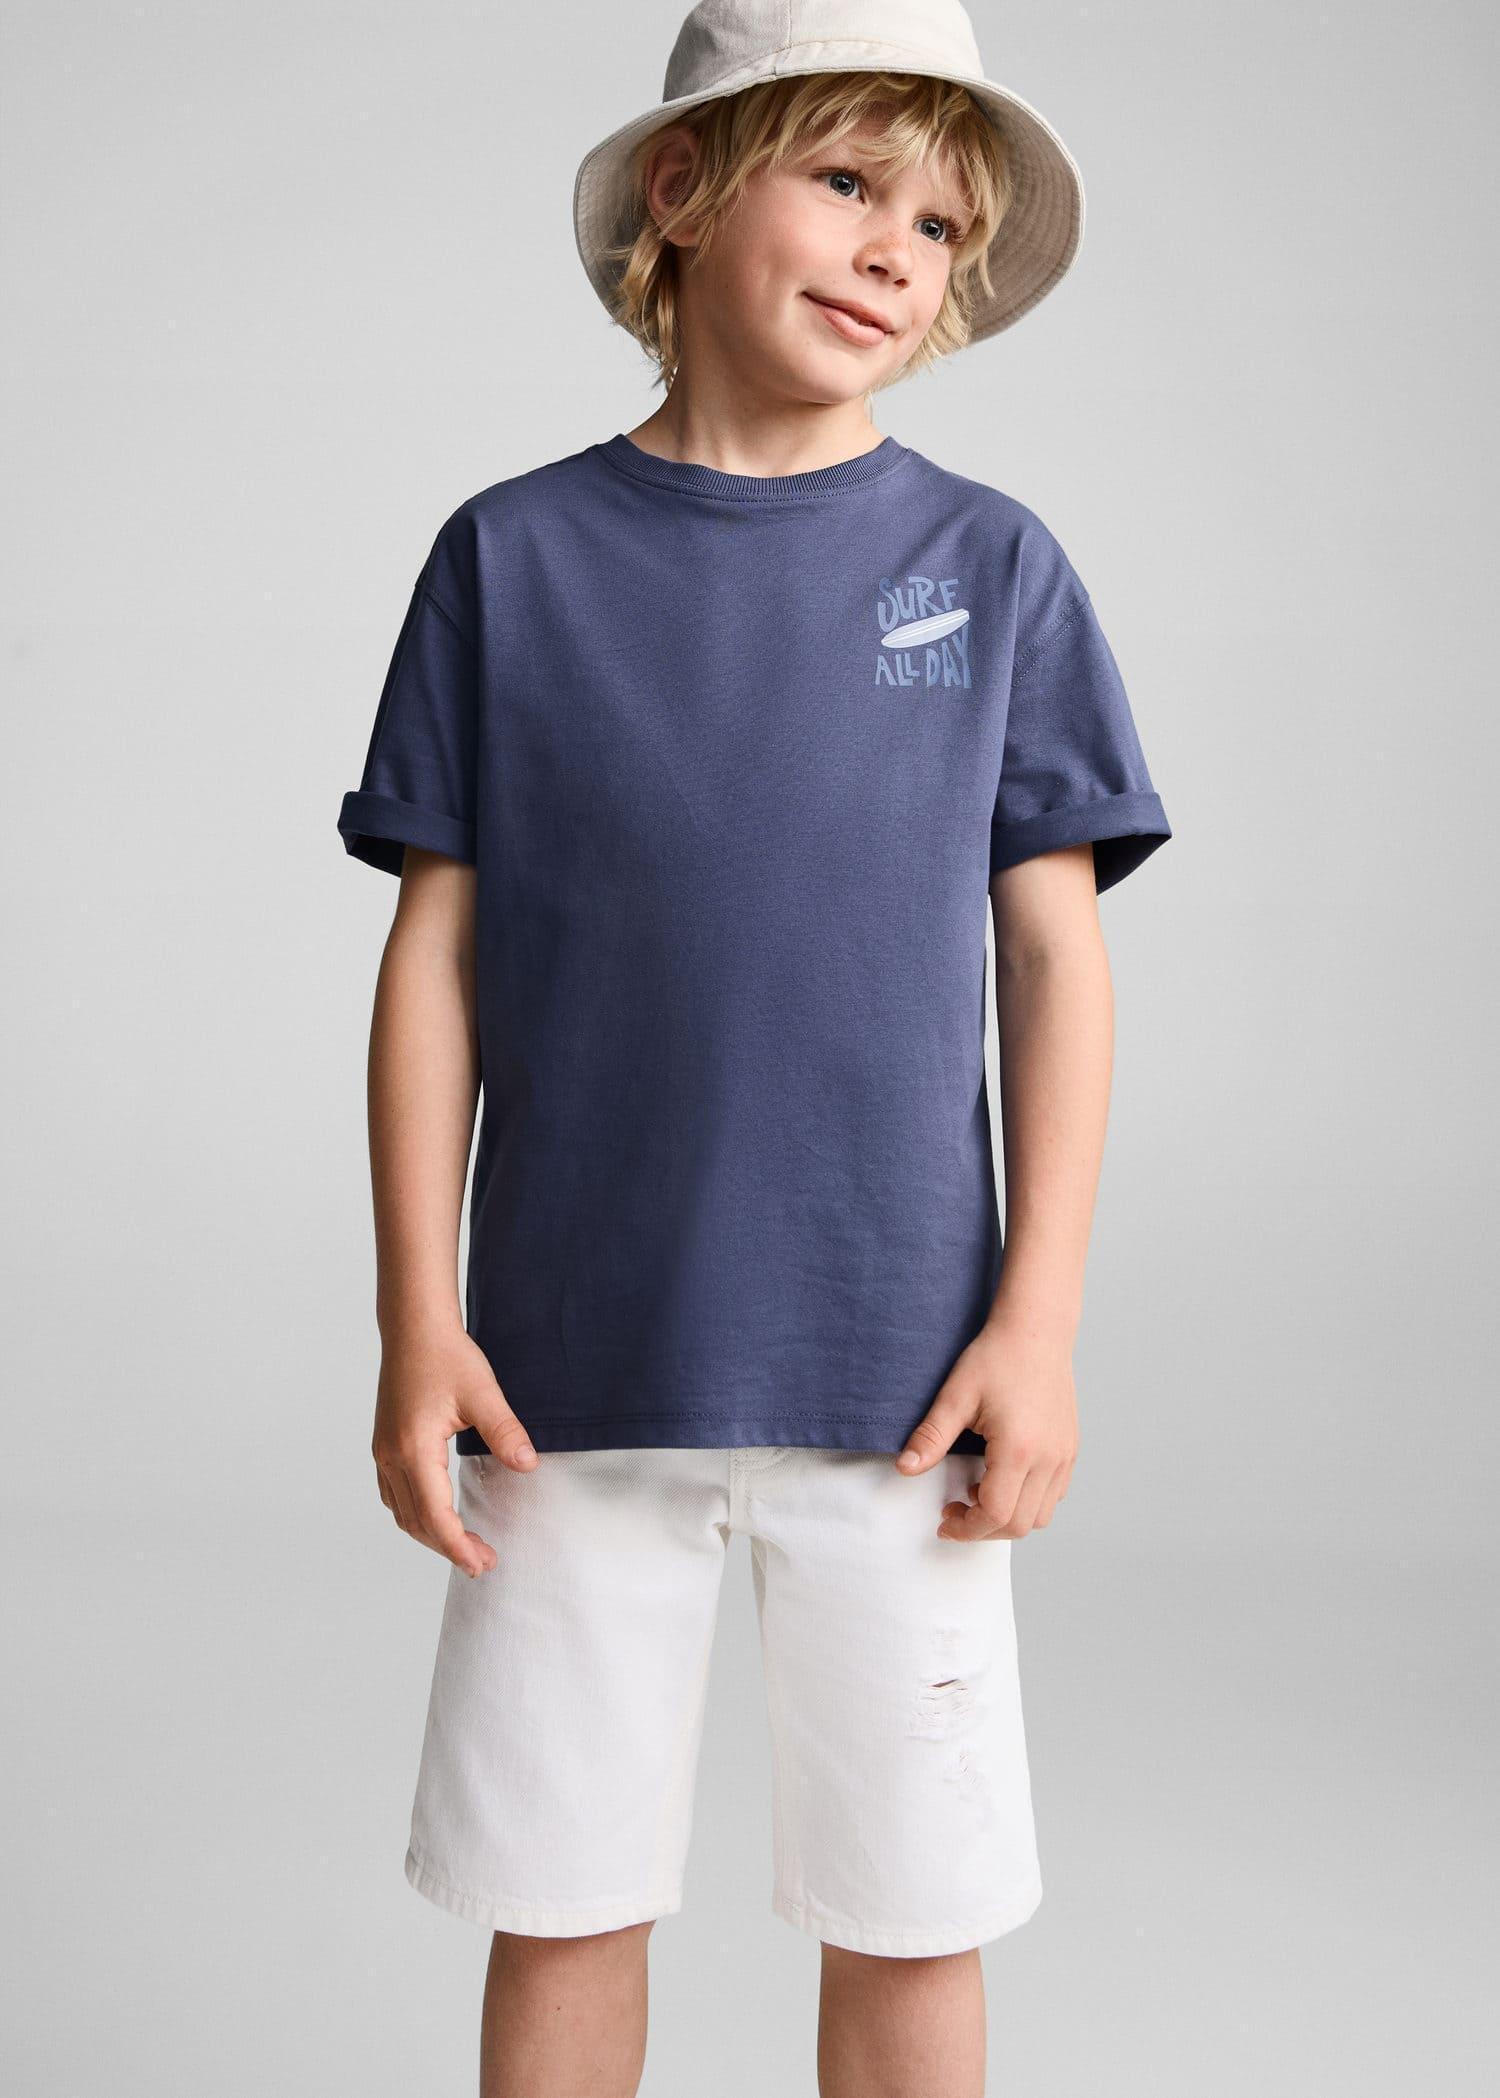 Mango - Blue Surf Printed T-Shirt, Kids Boys